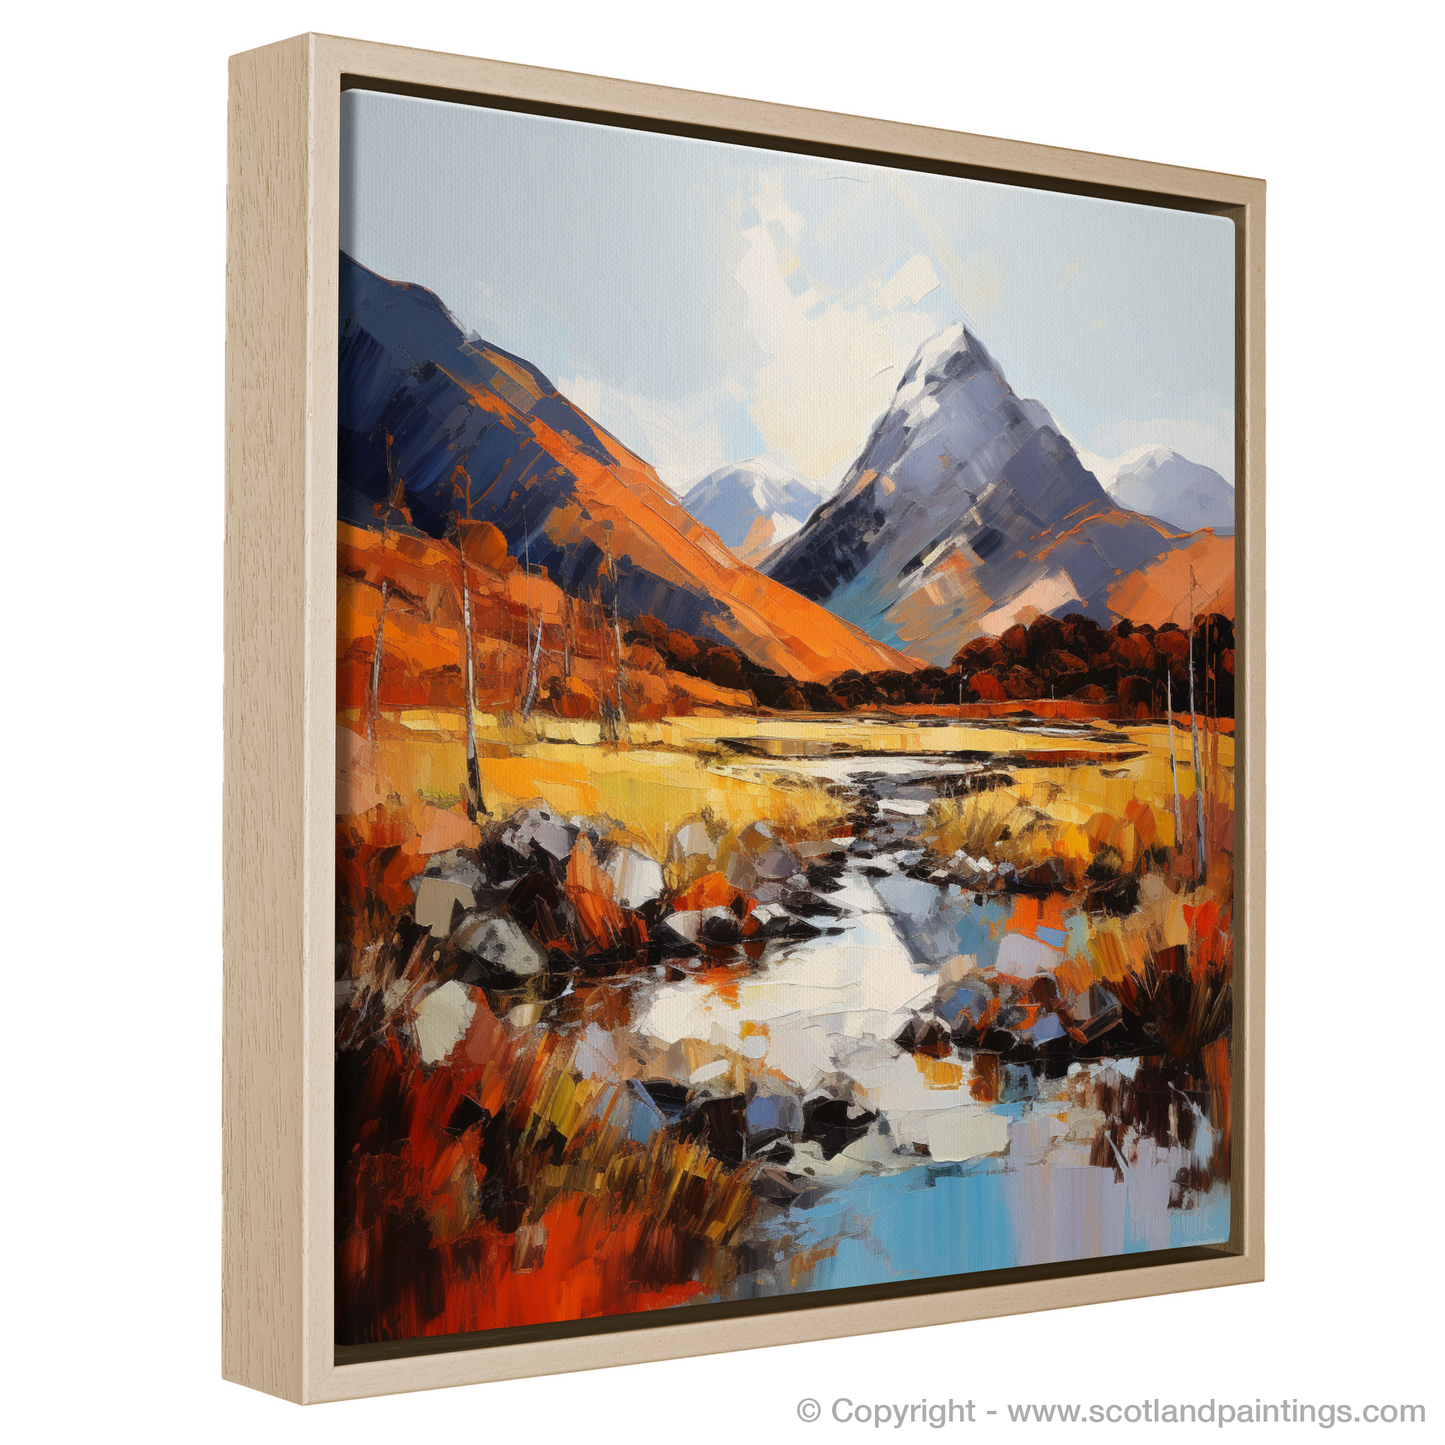 Painting and Art Print of Autumn hues in Glencoe entitled "Autumn Splendour in Glencoe".